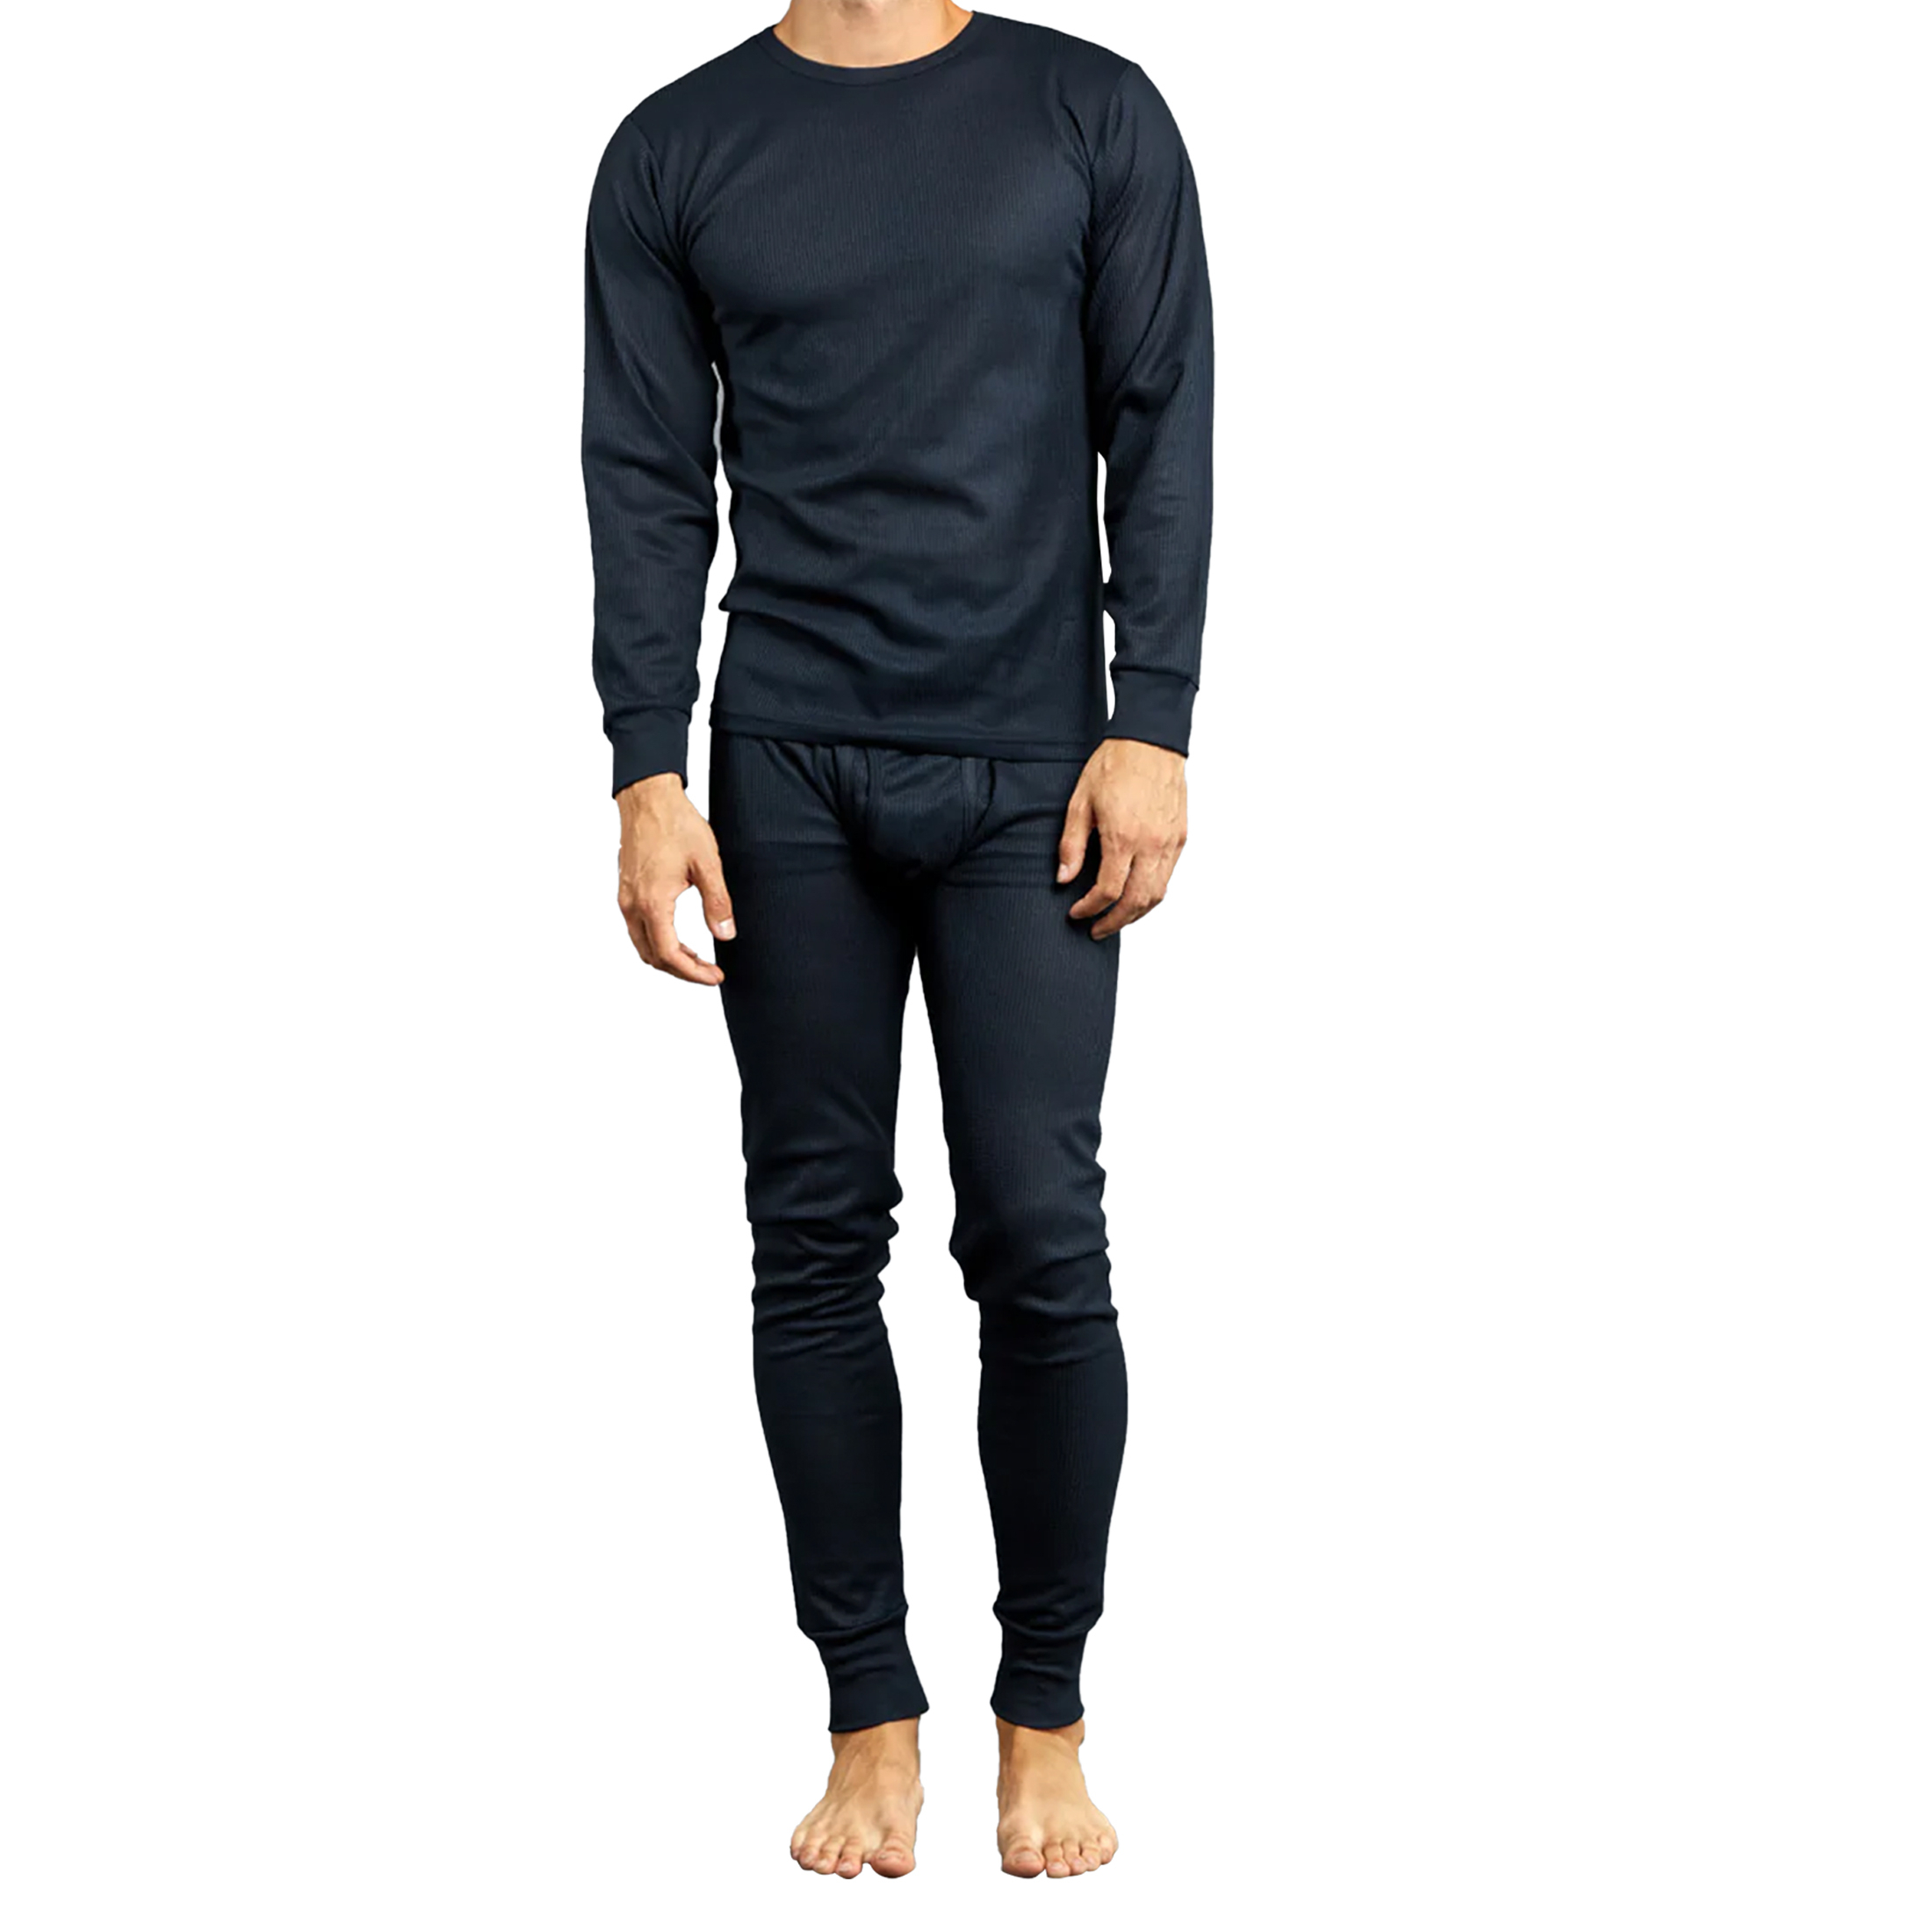 2-Piece: Men's Moisture Wicking Long Johns Base Layer Thermal Underwear Set (Top & Bottom) - Navy, Small